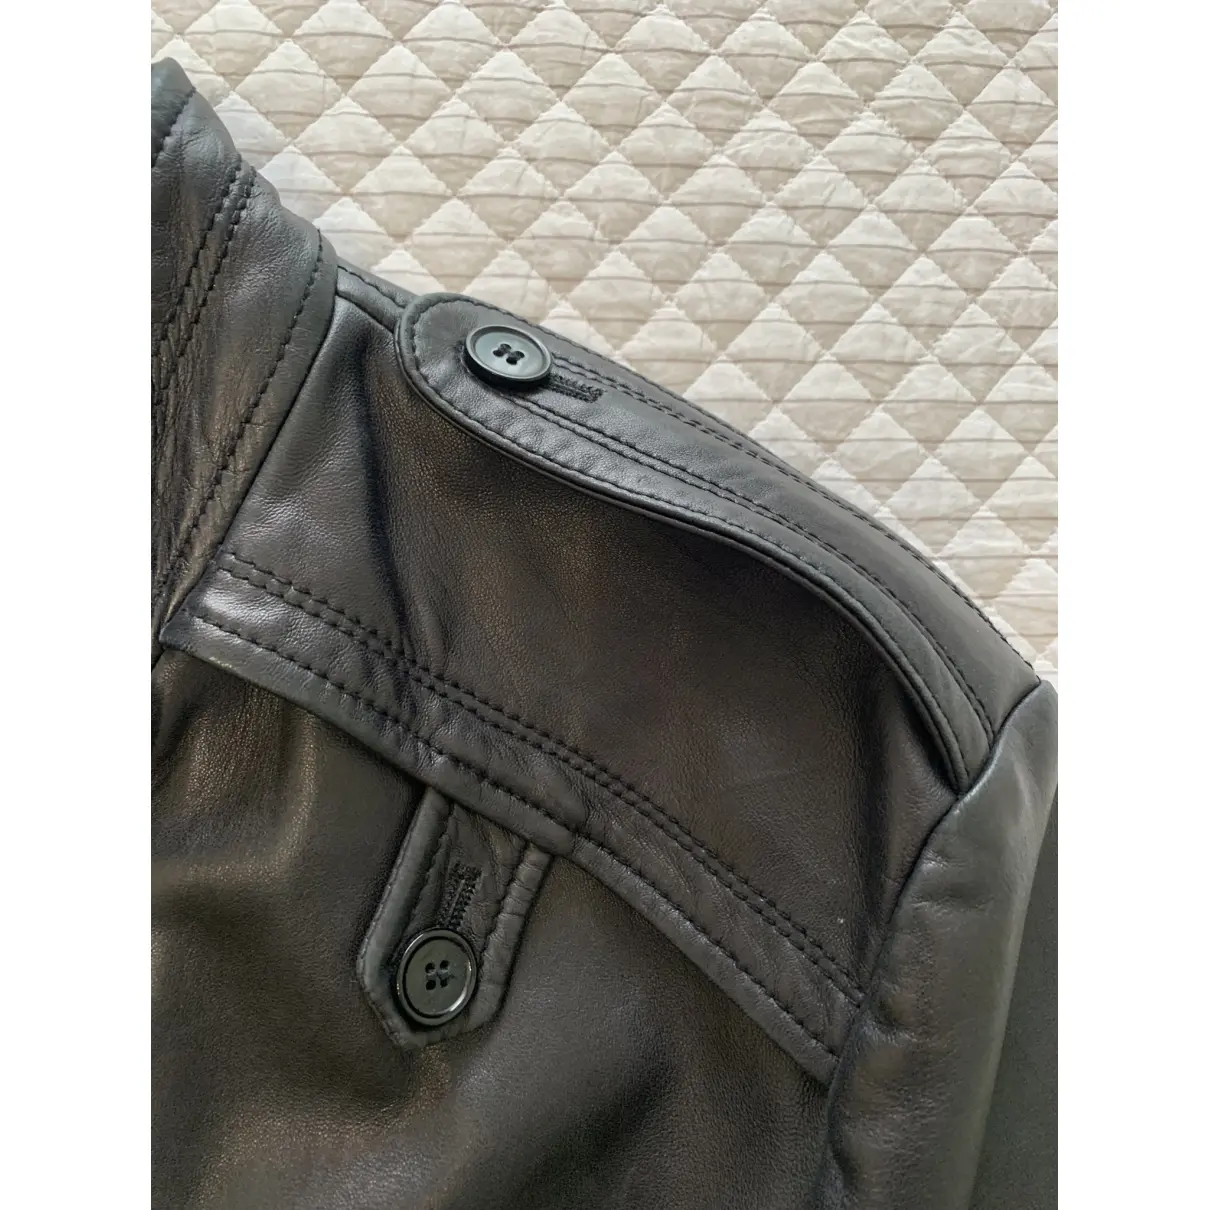 Leather jacket Dolce & Gabbana - Vintage